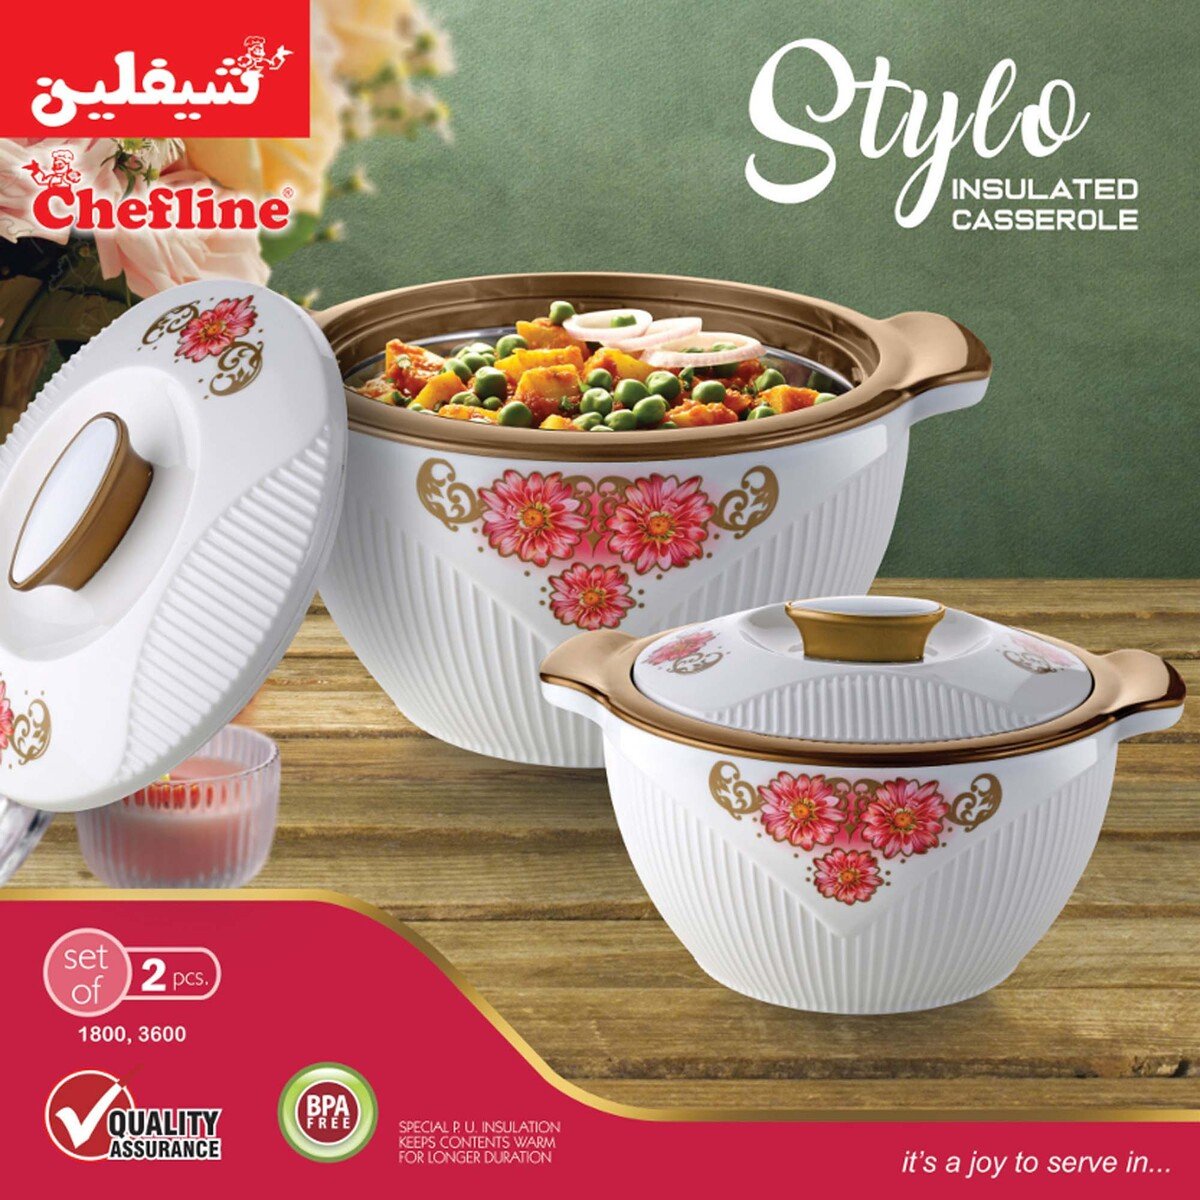 Chefline Plastic Hot Pot 2pcs Set STYLO 1.8Ltr 3.6Ltr 183600IND